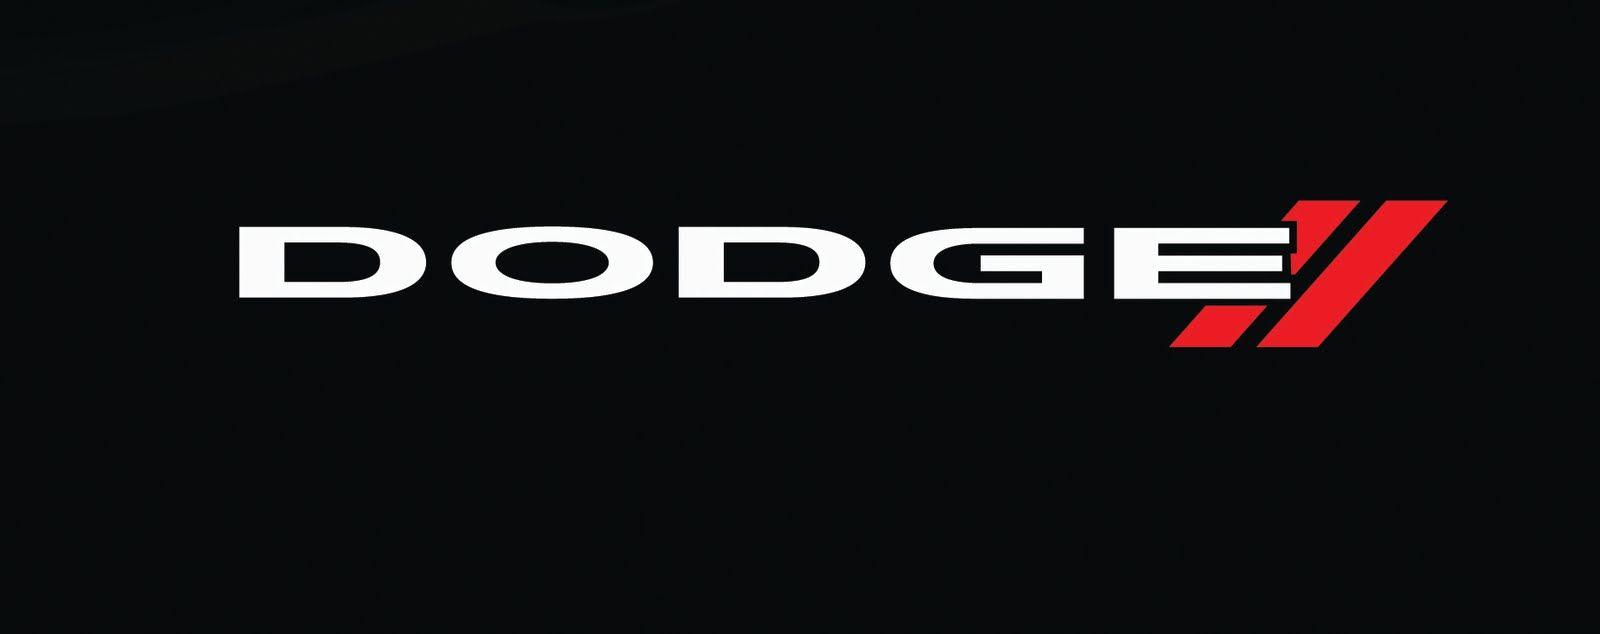 Red Dodge Logo - Dodge Logo, Dodge Car Symbol Meaning and History | Car Brand Names.com